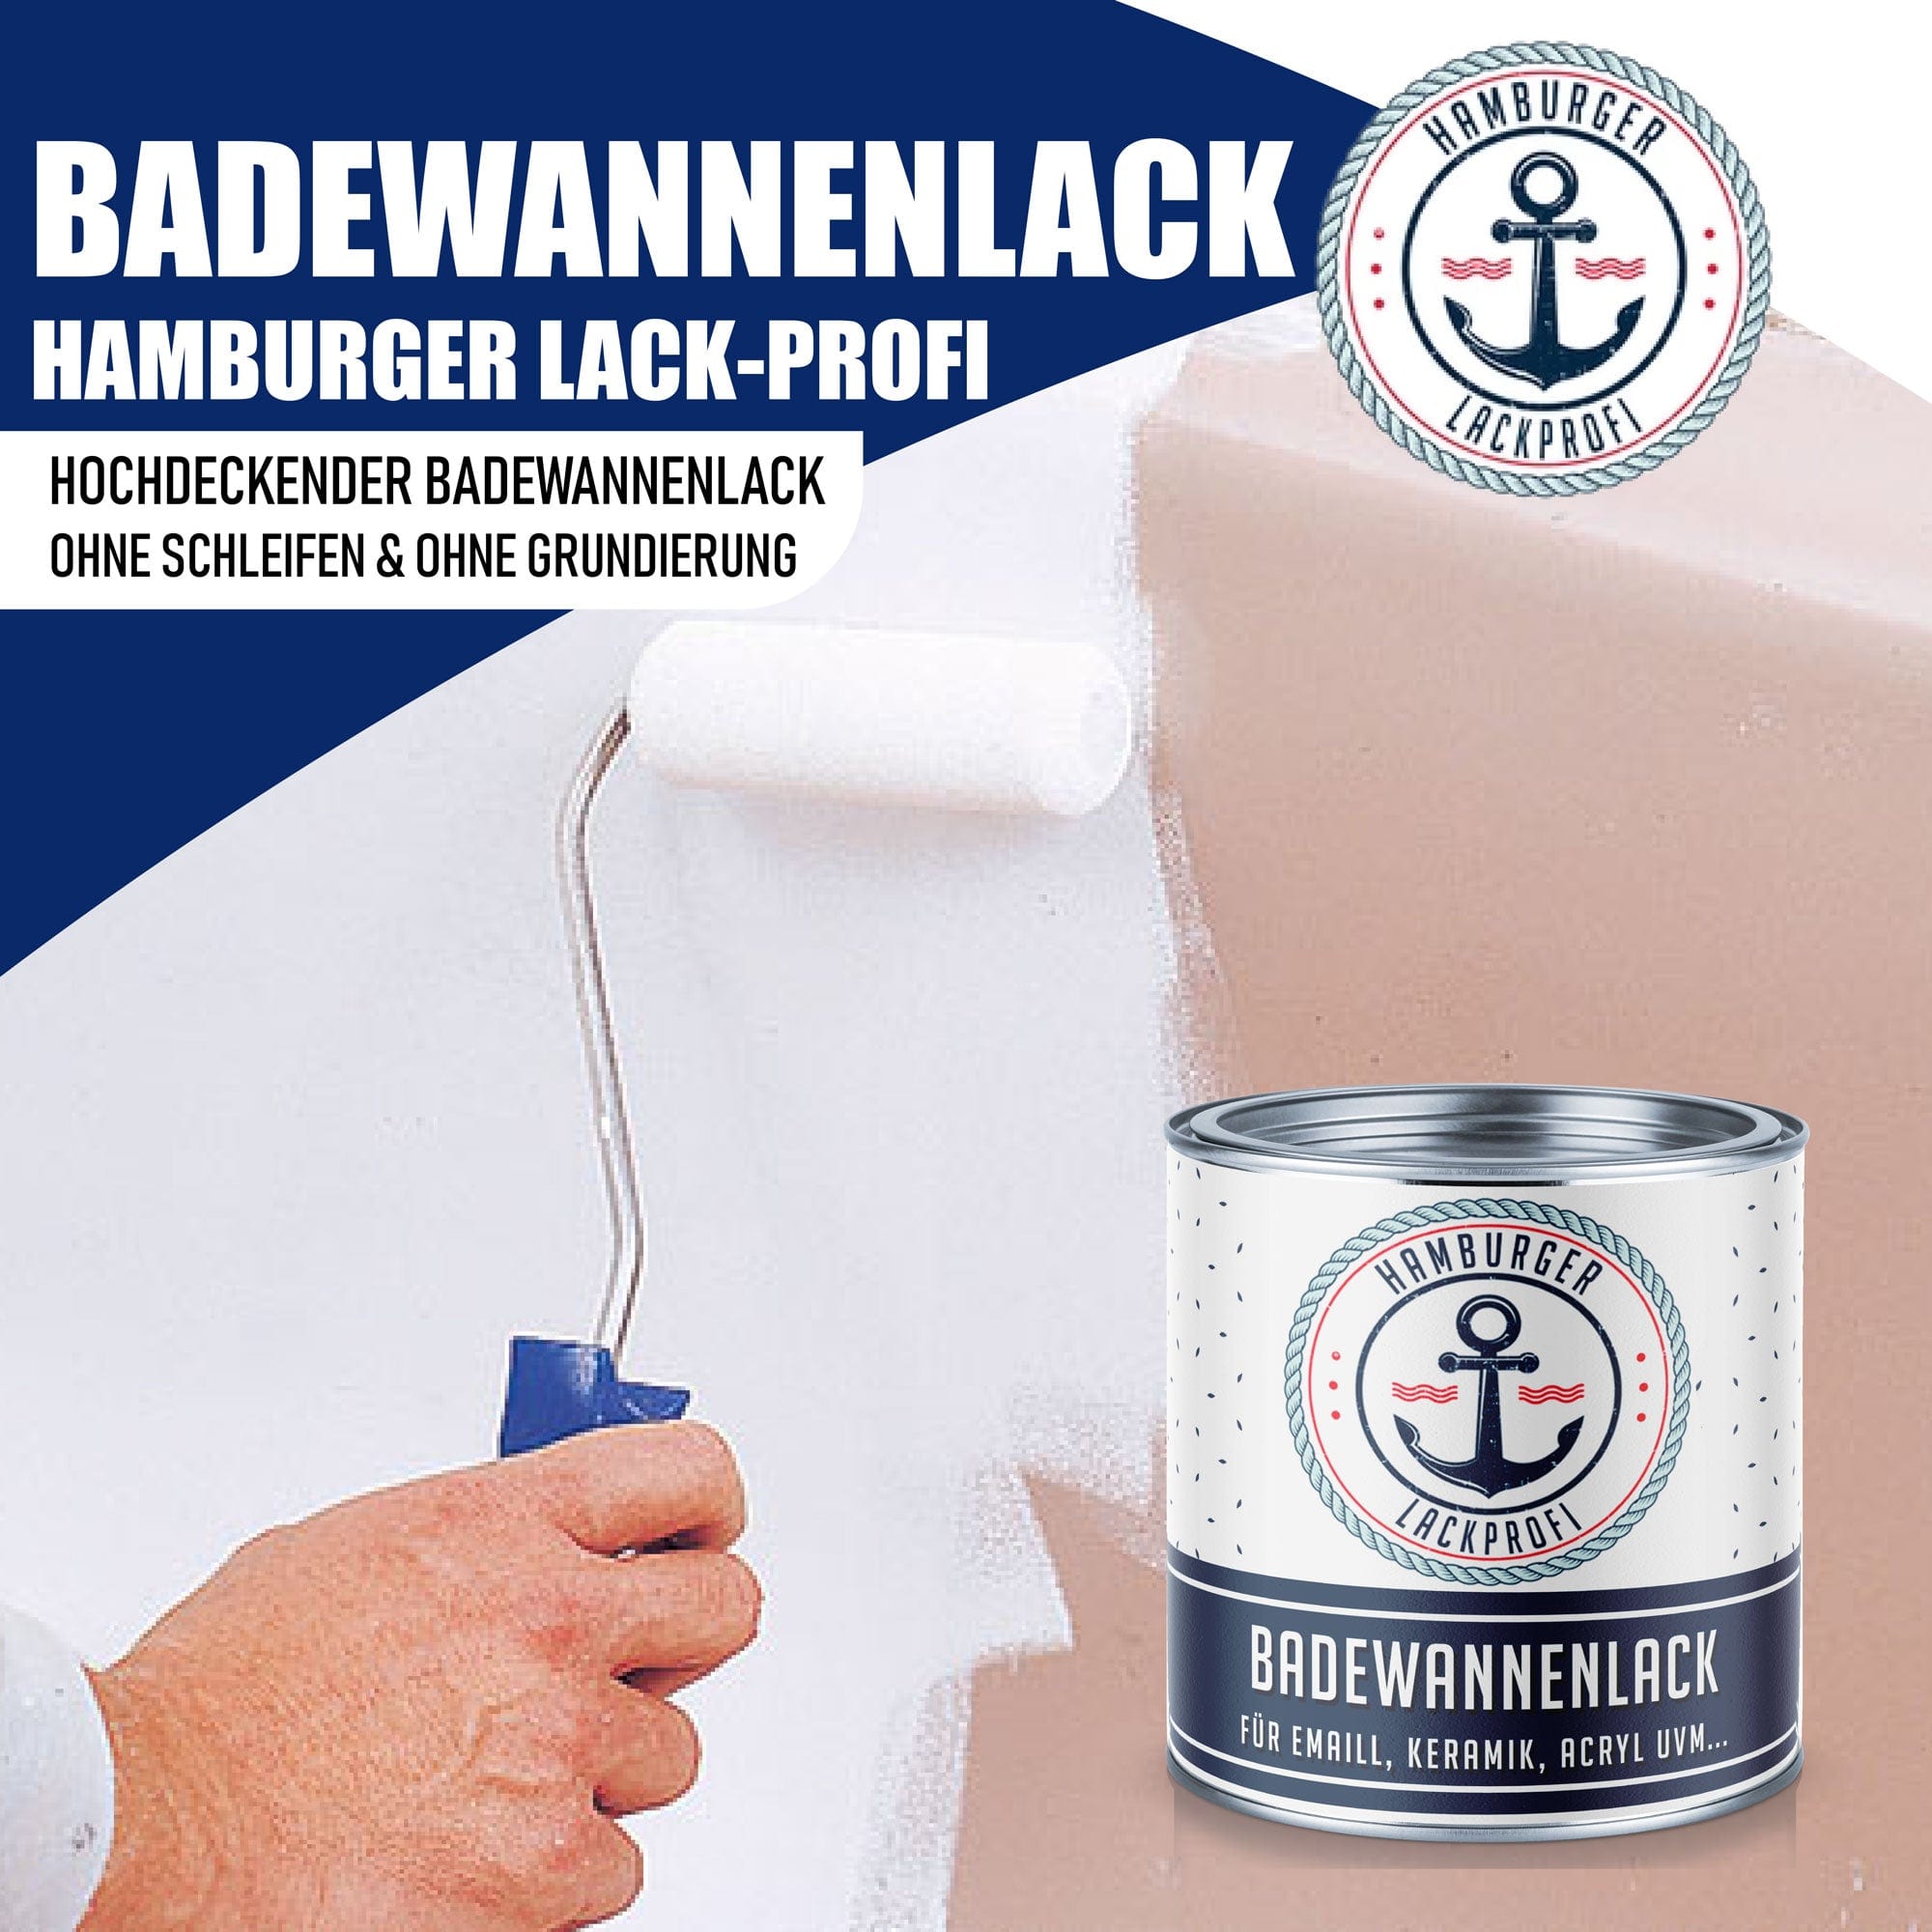 Hamburger Lack-Profi Badewannenlack Hamburger Lack-Profi 2K Badewannenlack Taubenblau RAL 5014 - Glänzend / Seidenmatt / Matt